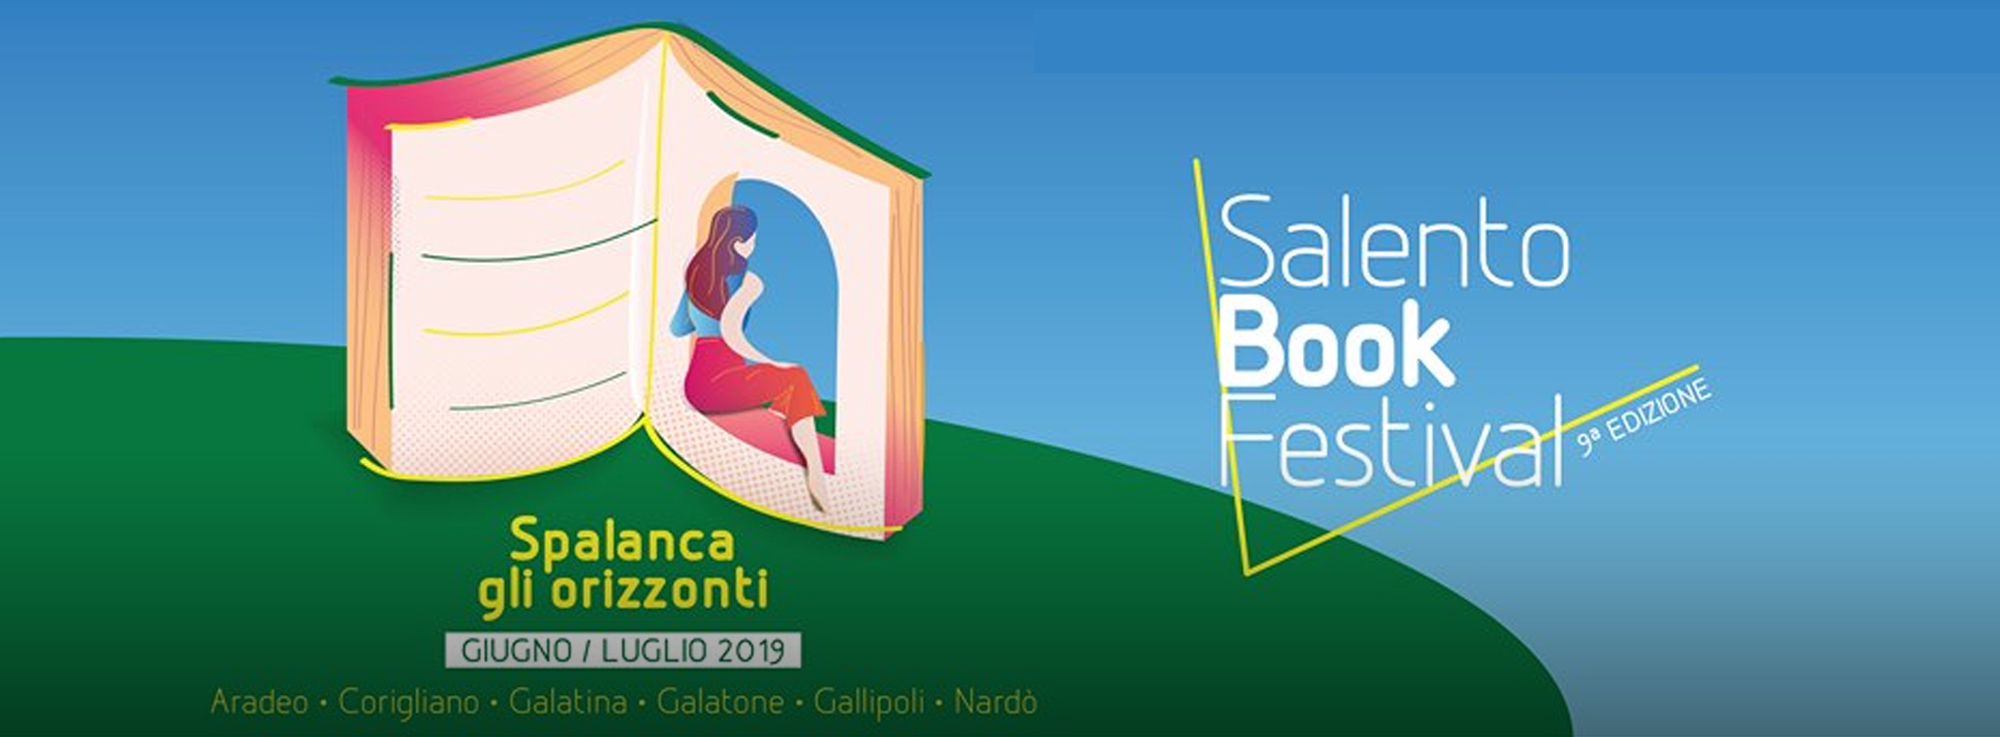 Aradeo, Corigliano d’Otranto, Galatina, Galatone, Gallipoli, Nardò: Salento Book Festival 2019